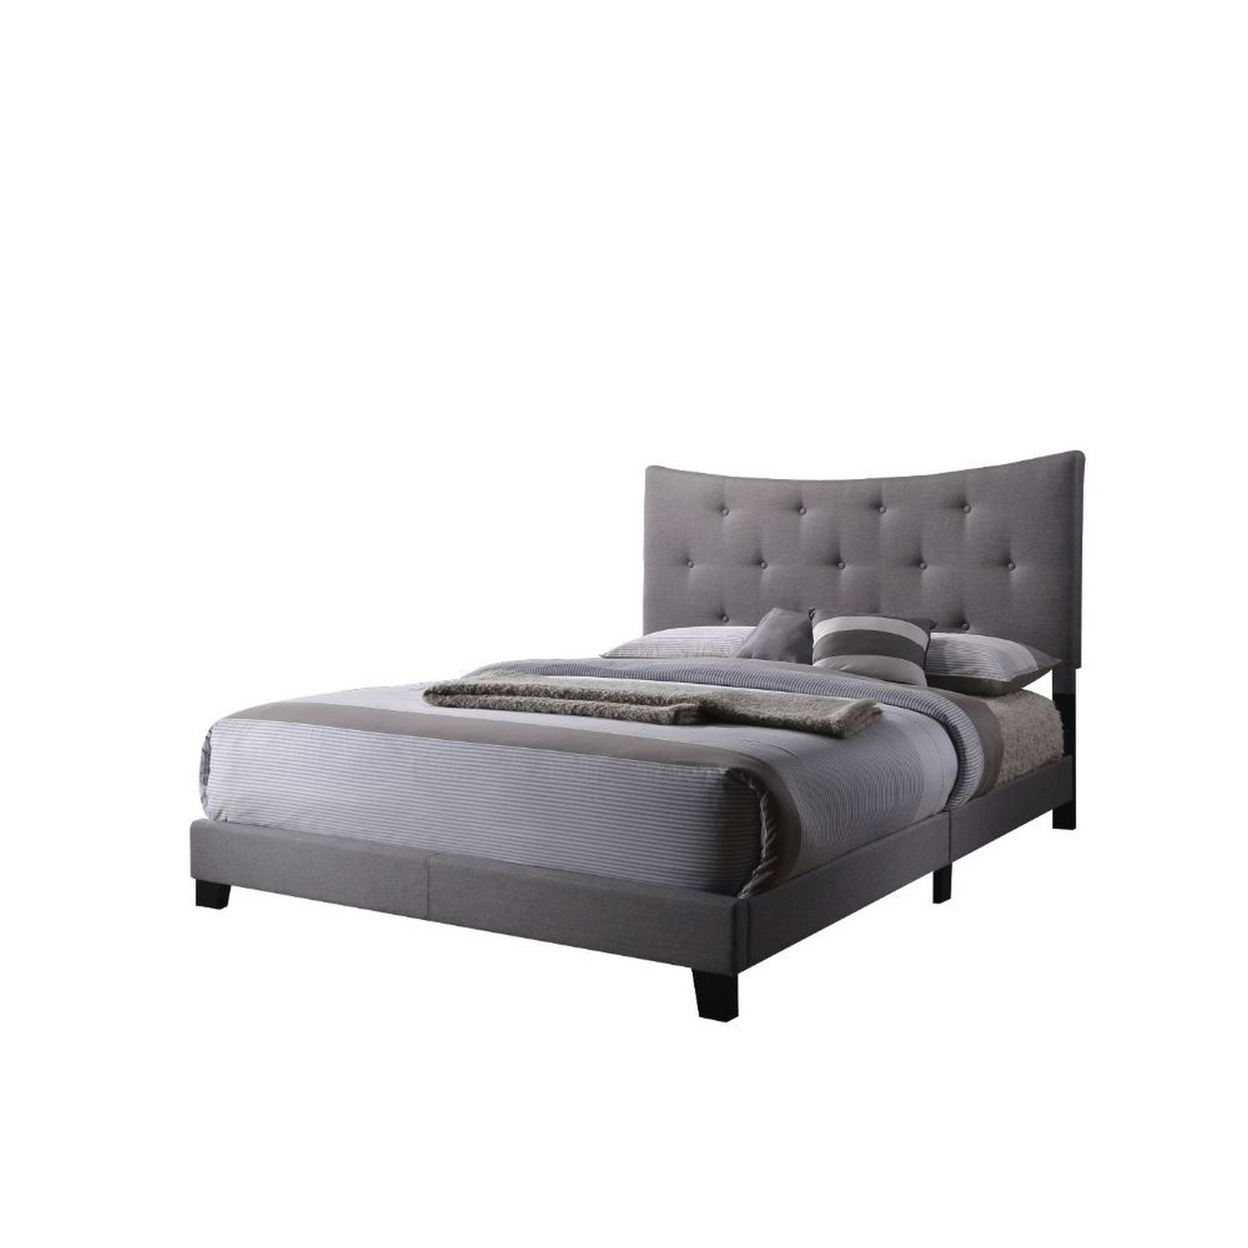 ACME Venacha Upholstered Platform Queen Bed, Gray Fabric - image 1 of 6